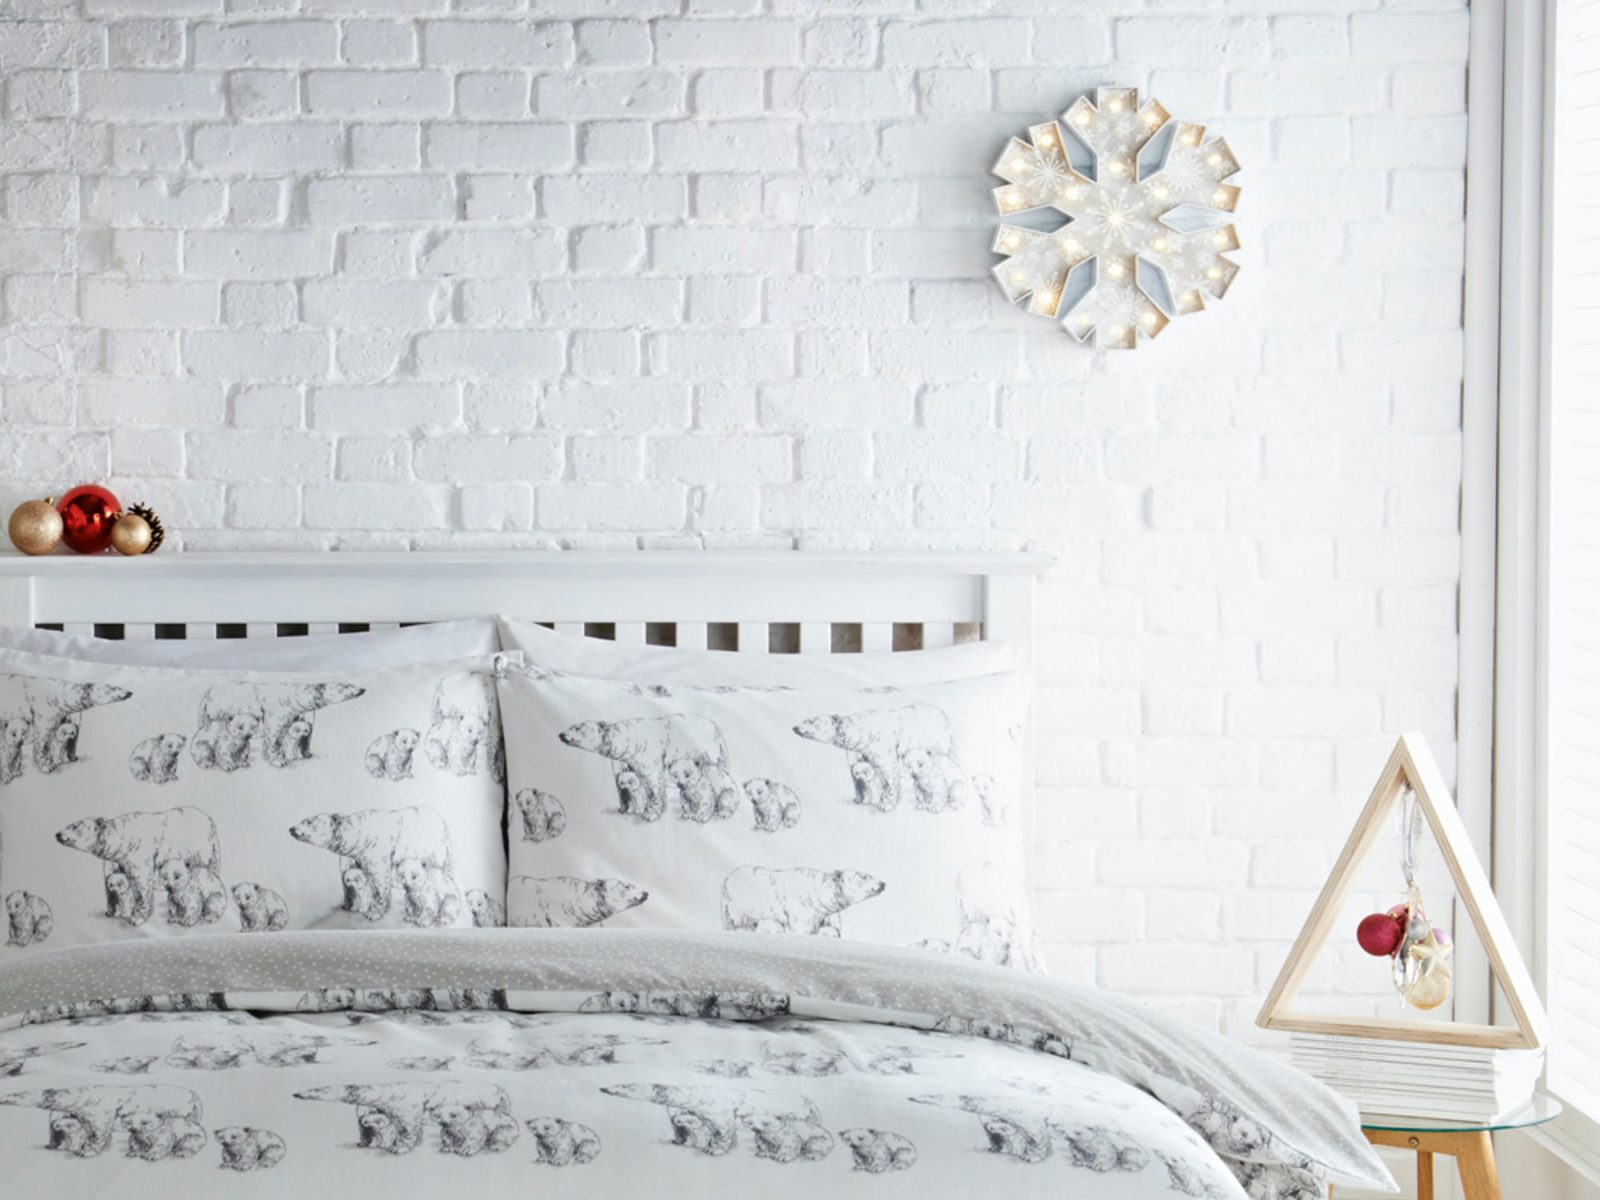 Polar Bear Flannel Christmas Bedding - £20.00 to £30.00